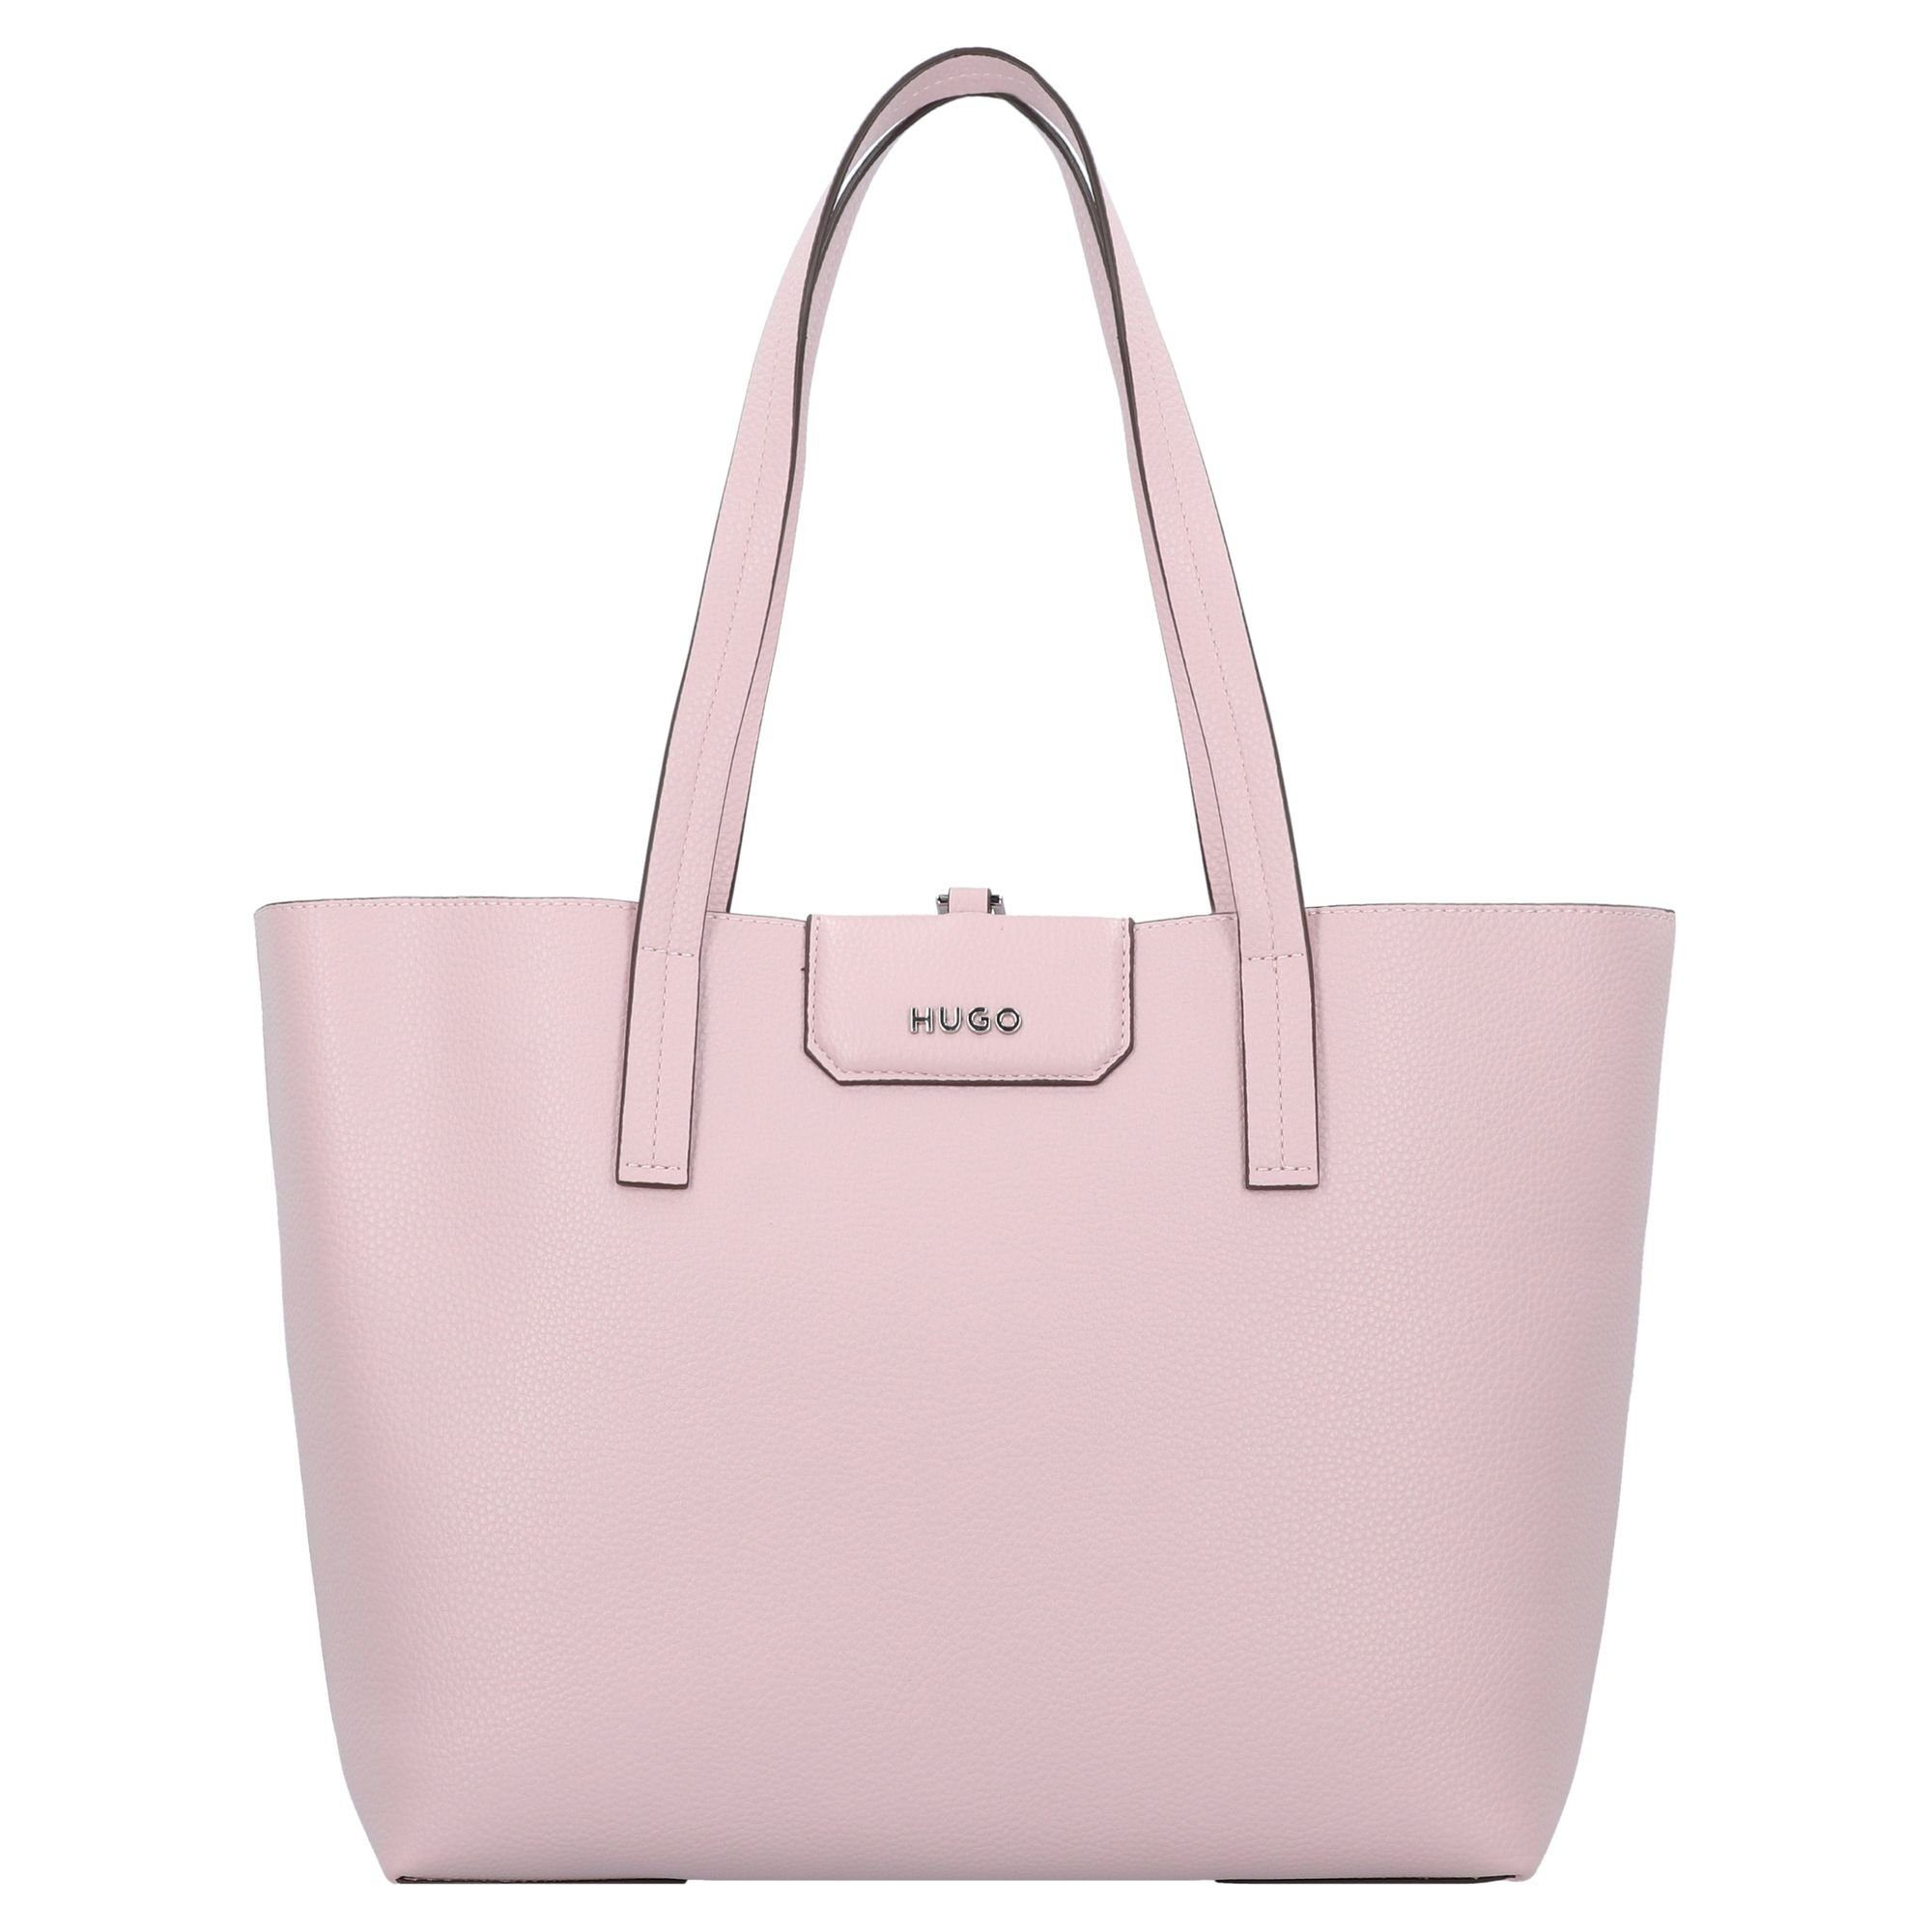 Regulärer Online-Verkauf HUGO Shopper light pink Polyurethan Chris